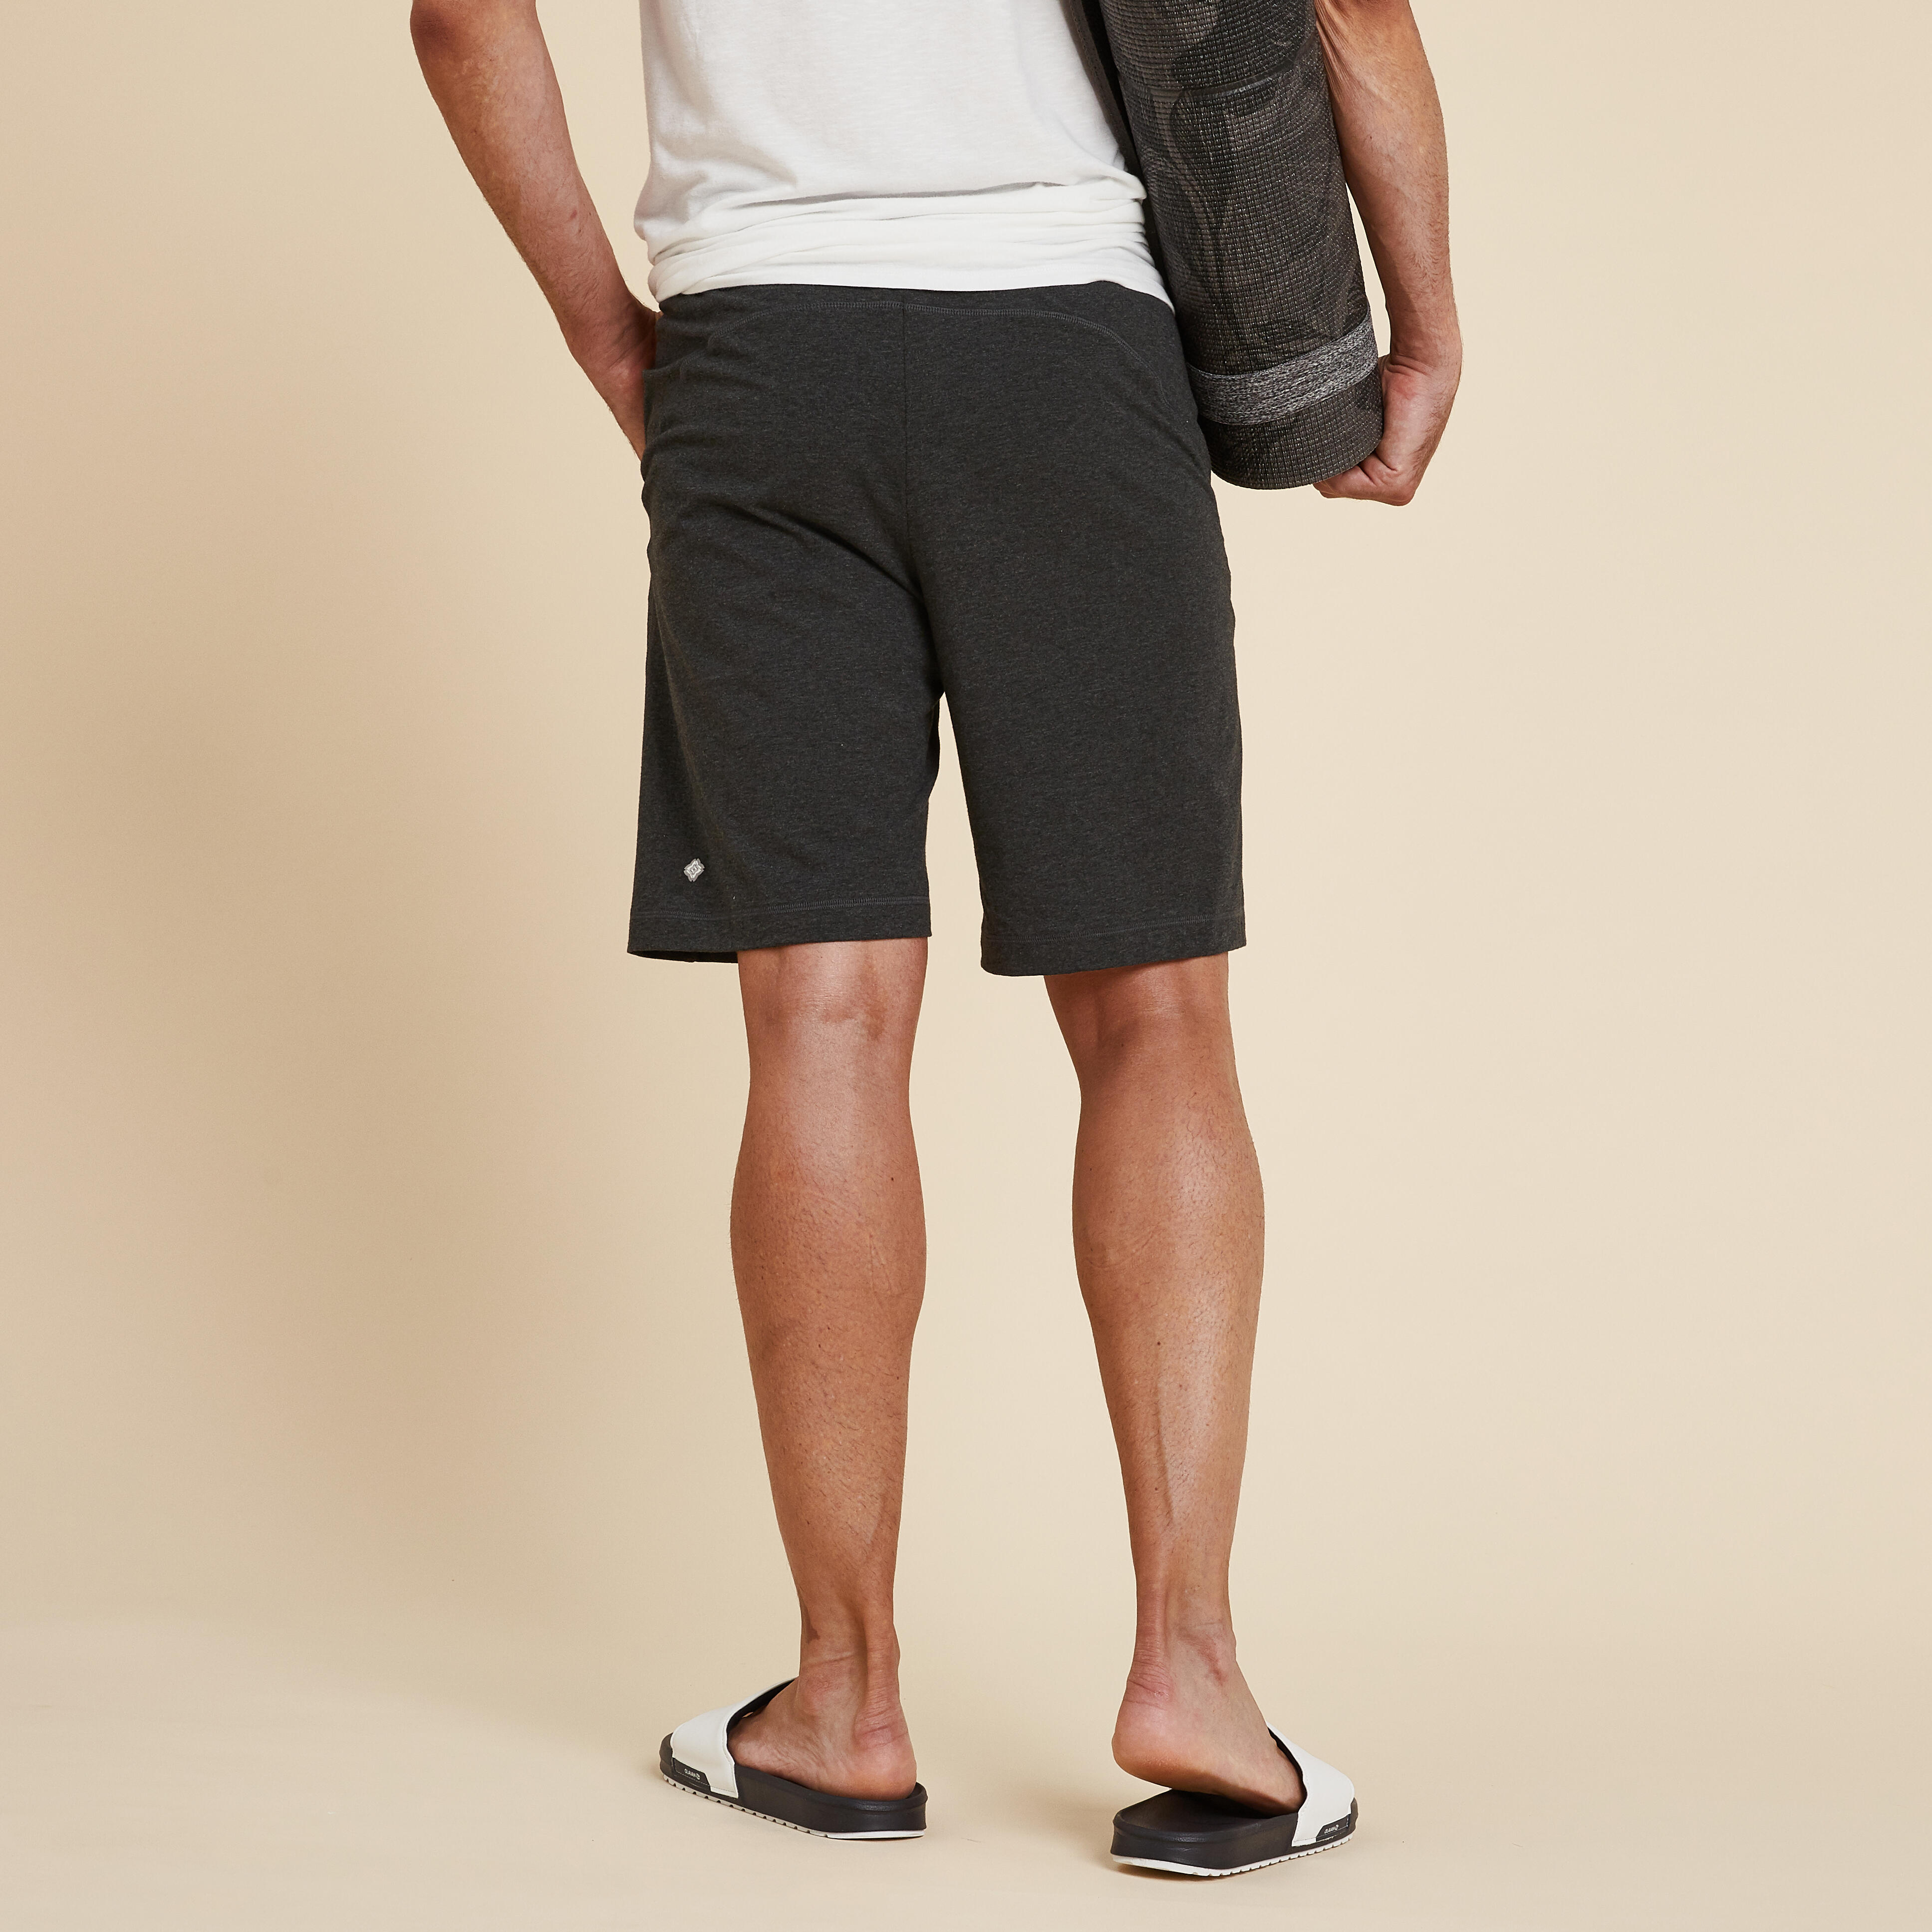 Men’s Cotton Yoga Shorts - Grey